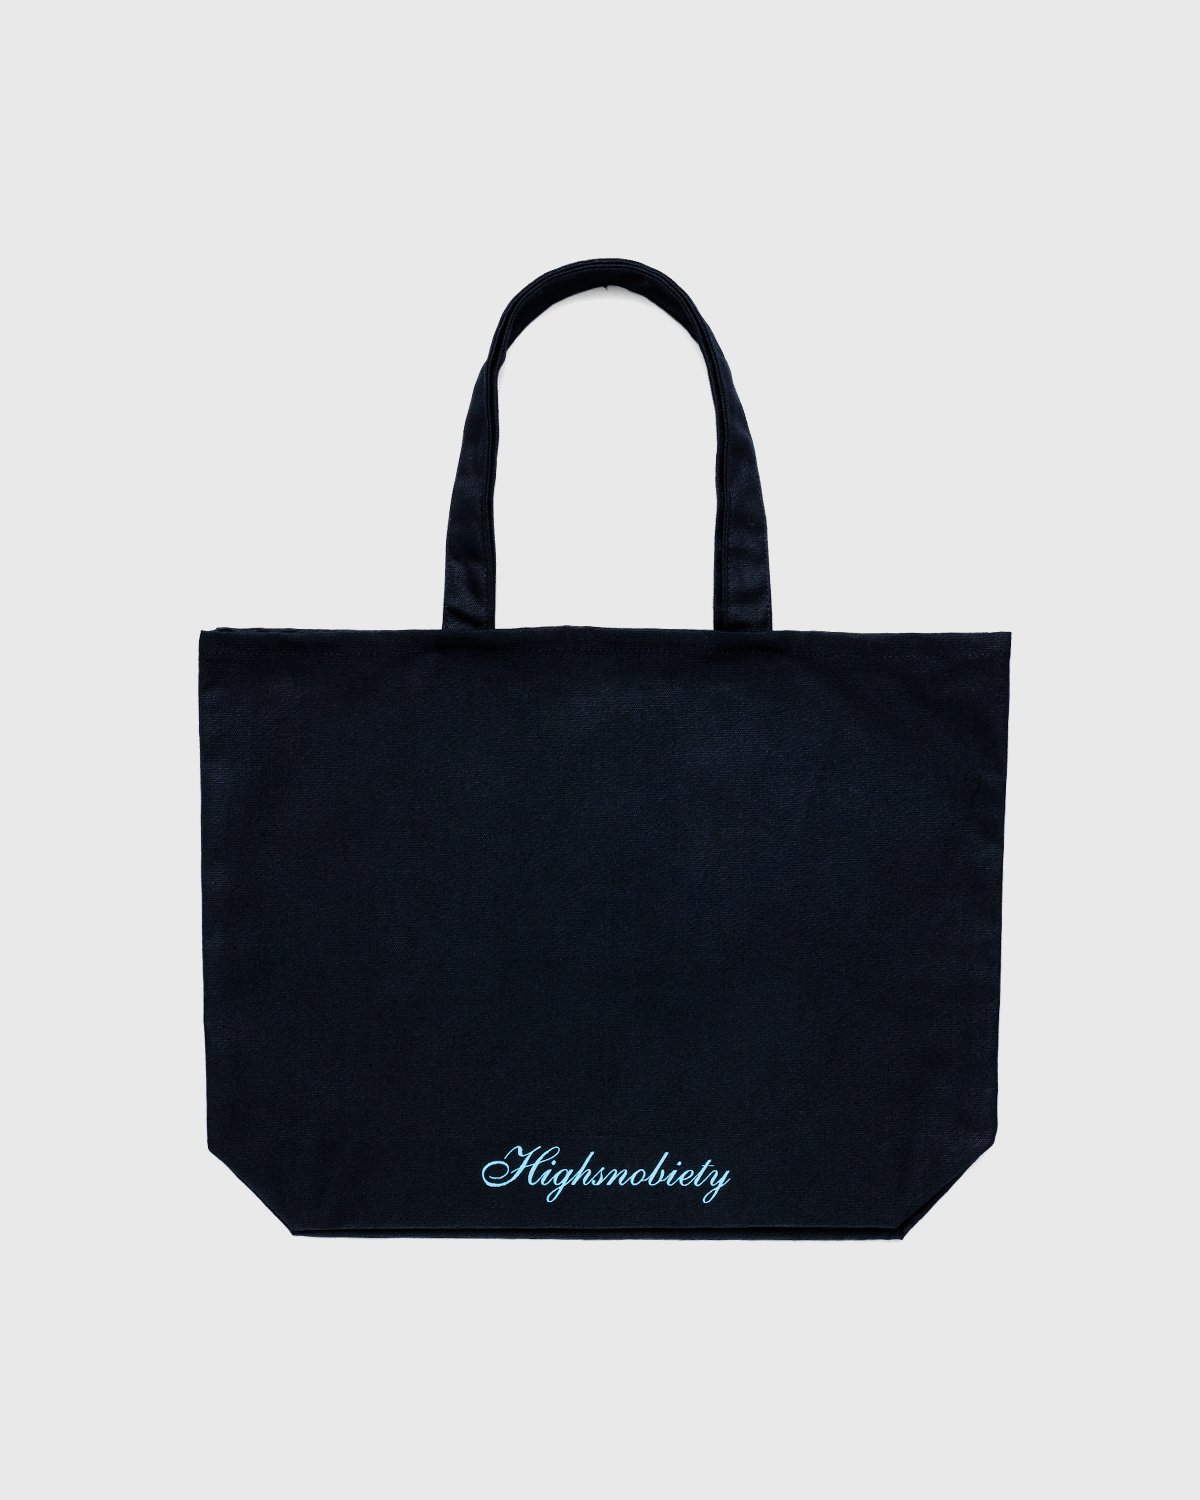 Highsnobiety - Not In Paris 3 x Galerie Perrotin Tote Bag Black - Accessories - Black - Image 2